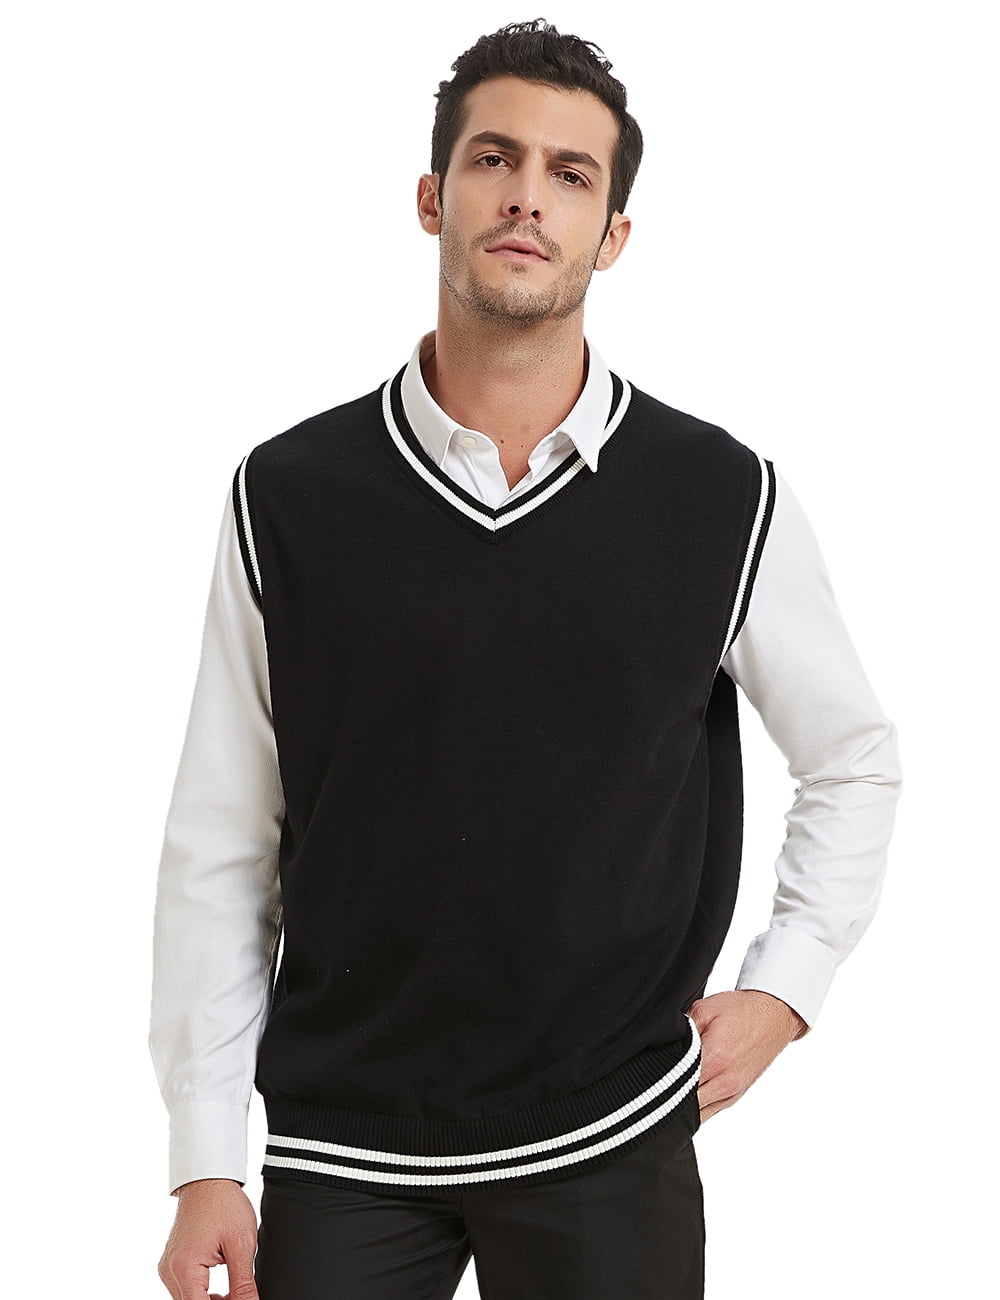 Toptie Mens Sweater Vest, Black and White Trimmed V-Neck Soft Knit ...